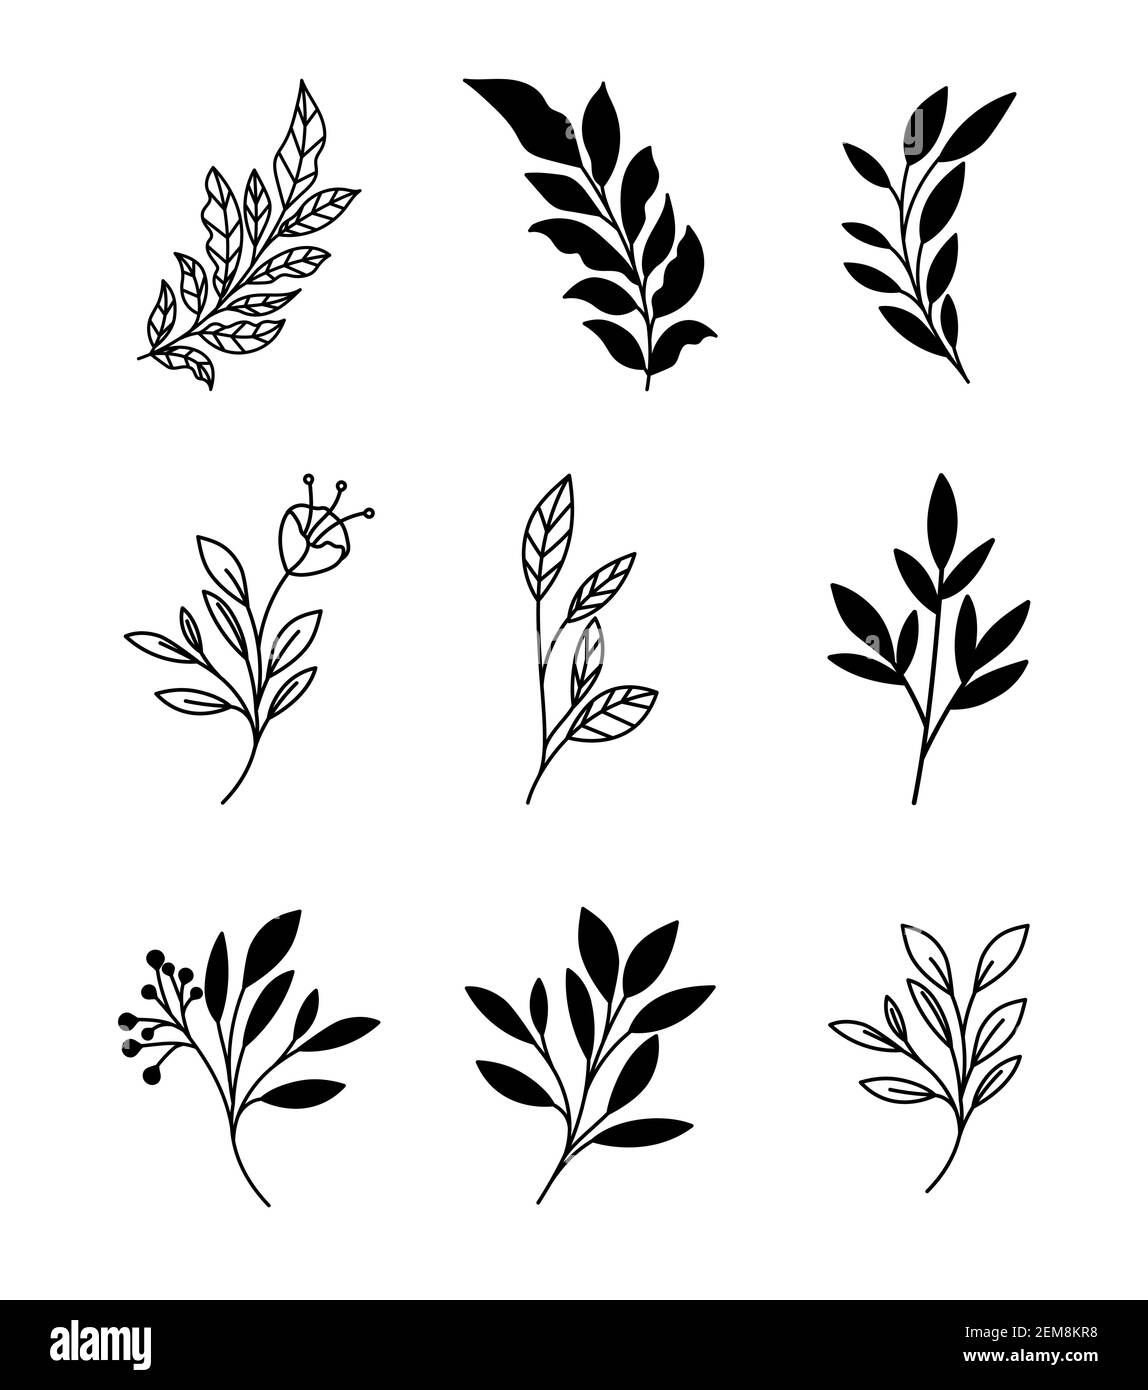 Meaningful Leaf Tattoo Ideas for Every Season of Life  Tattoo Glee